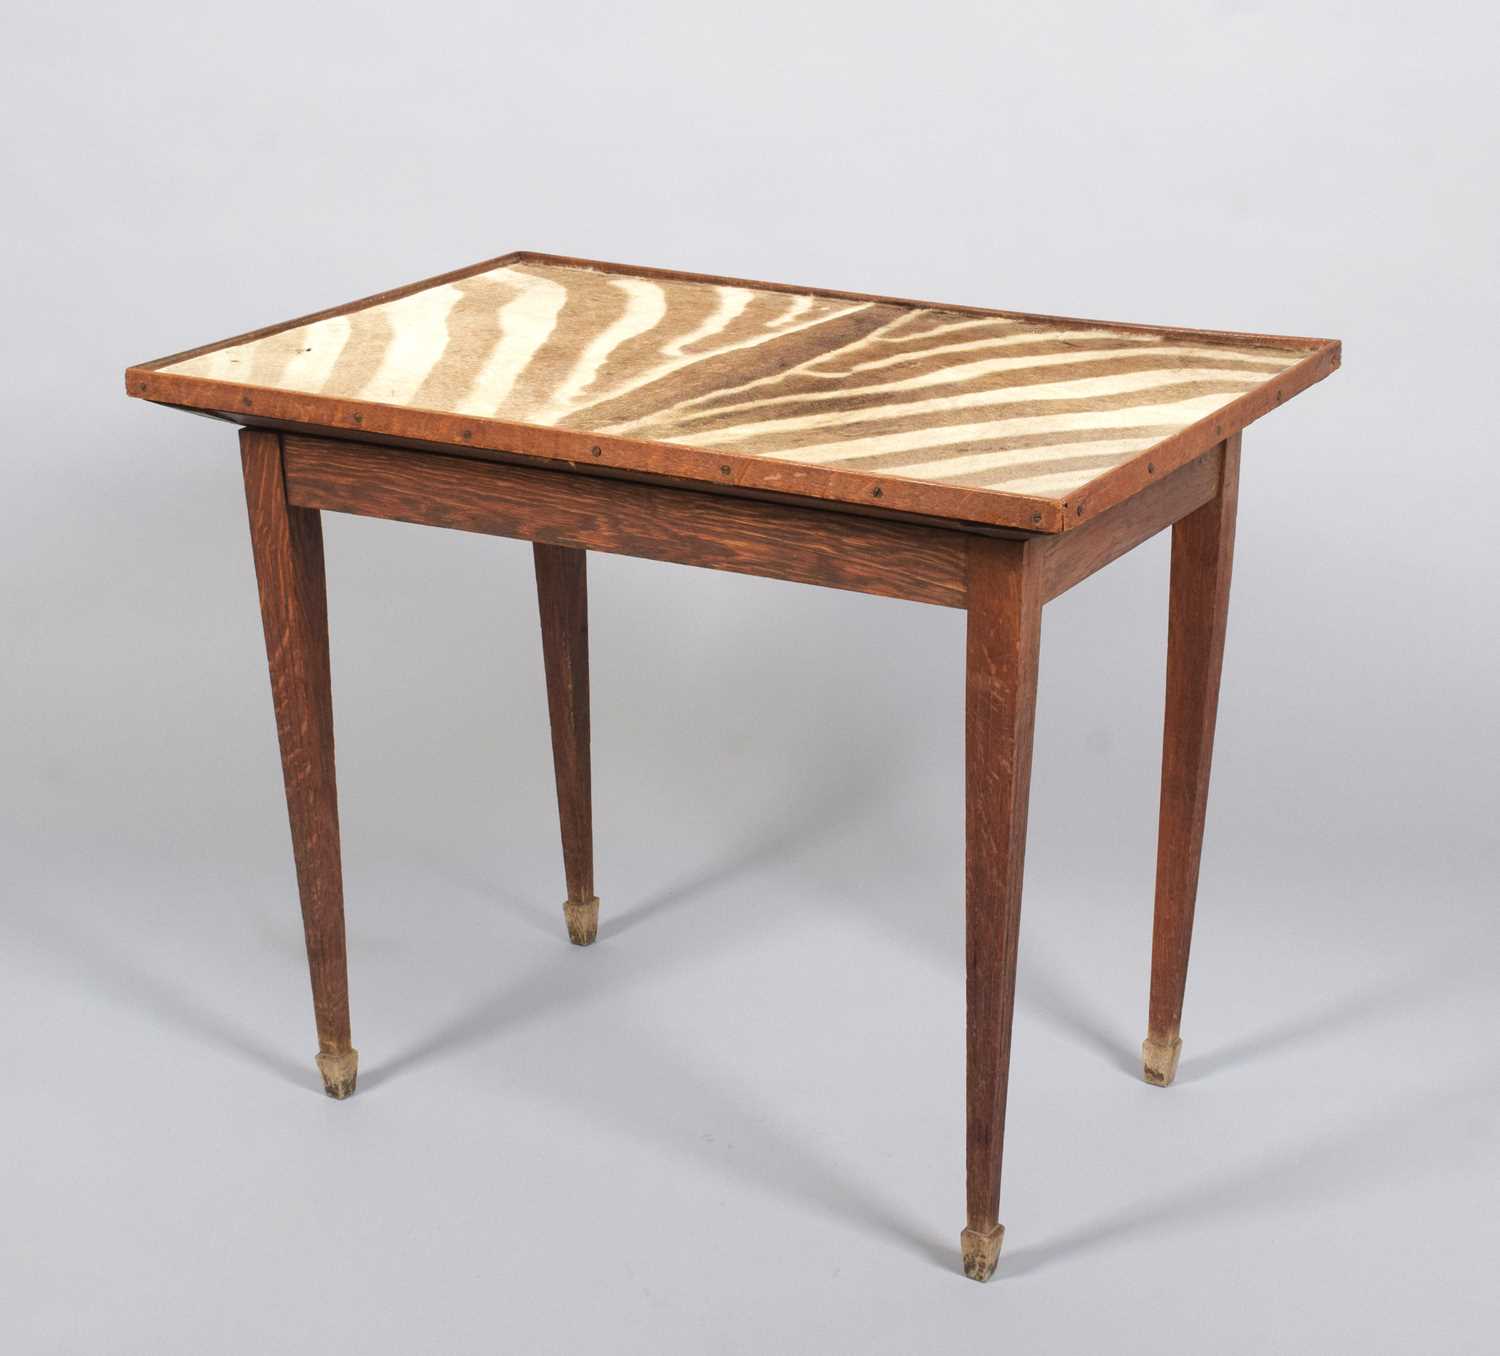 Animal Furniture: A Plains Zebra Hide Bridge Table, by Rowland Ward Ltd, 167 Piccadilly, London, the